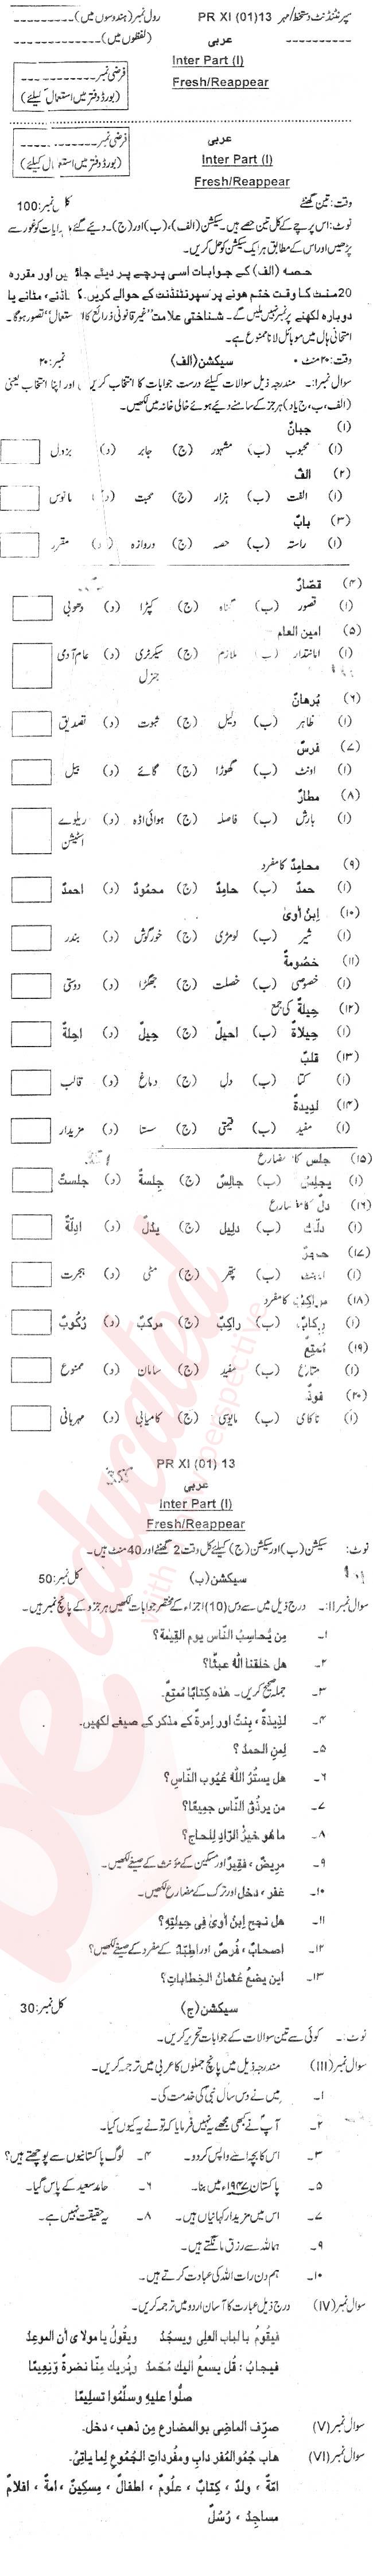 Arabic FA Part 1 Past Paper Group 1 BISE Kohat 2013